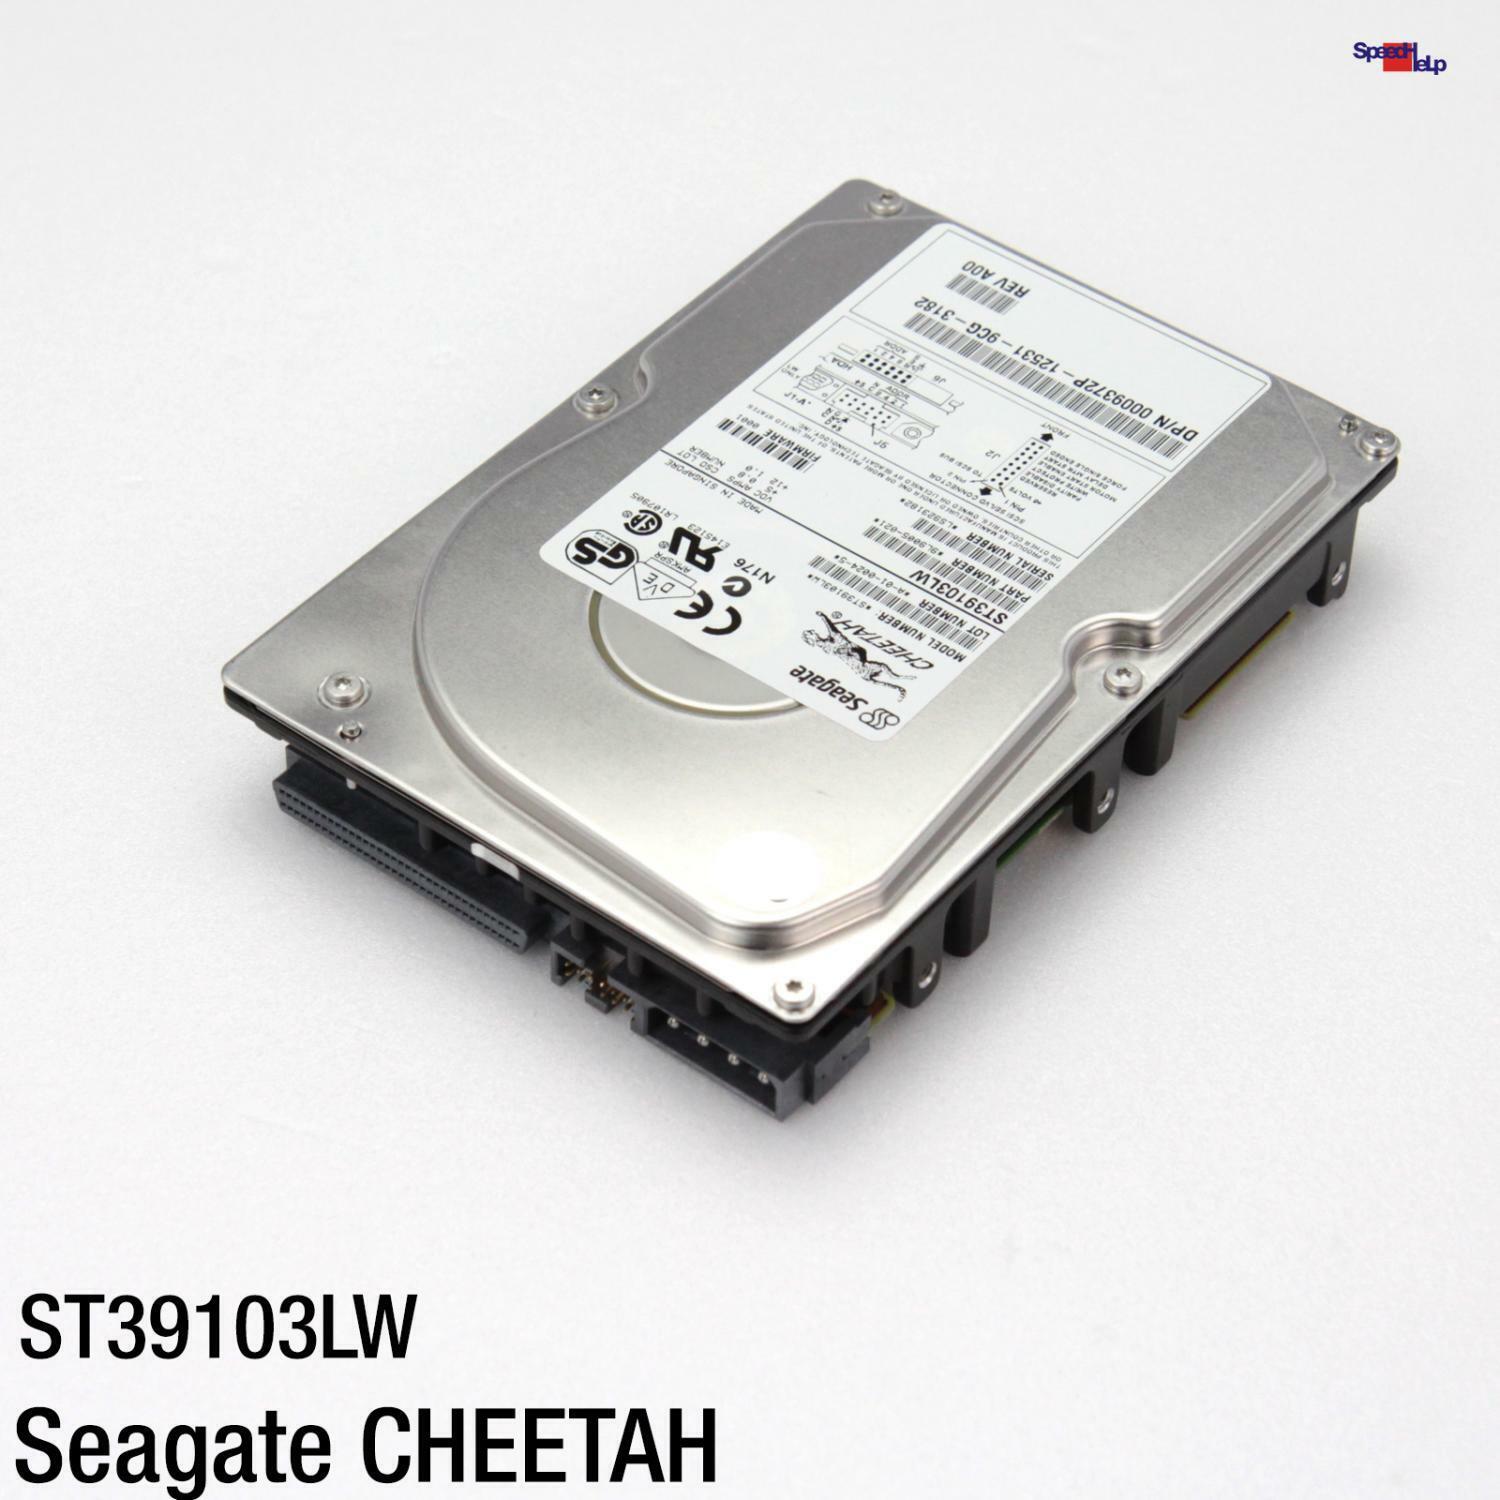 Seagate Cheetah ST39103LW Ultra Wide SCSI 68-PIN Pole HDD Hard Drive Disk Ok